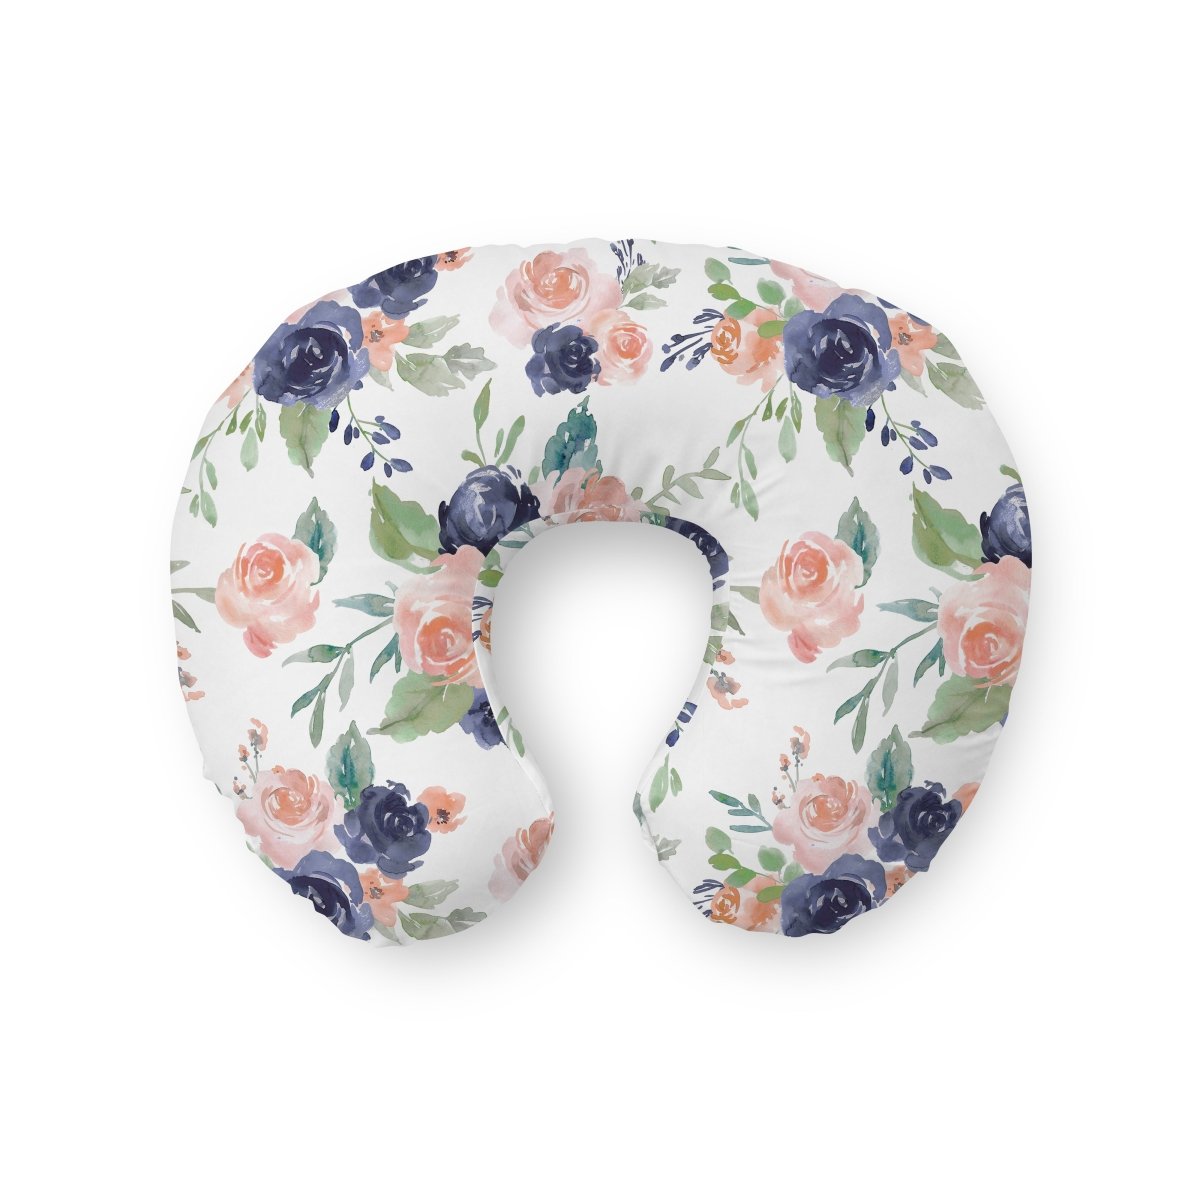 Peach & Navy Floral Nursing Pillow Cover - gender_girl, Peach & Navy Floral, Theme_Floral